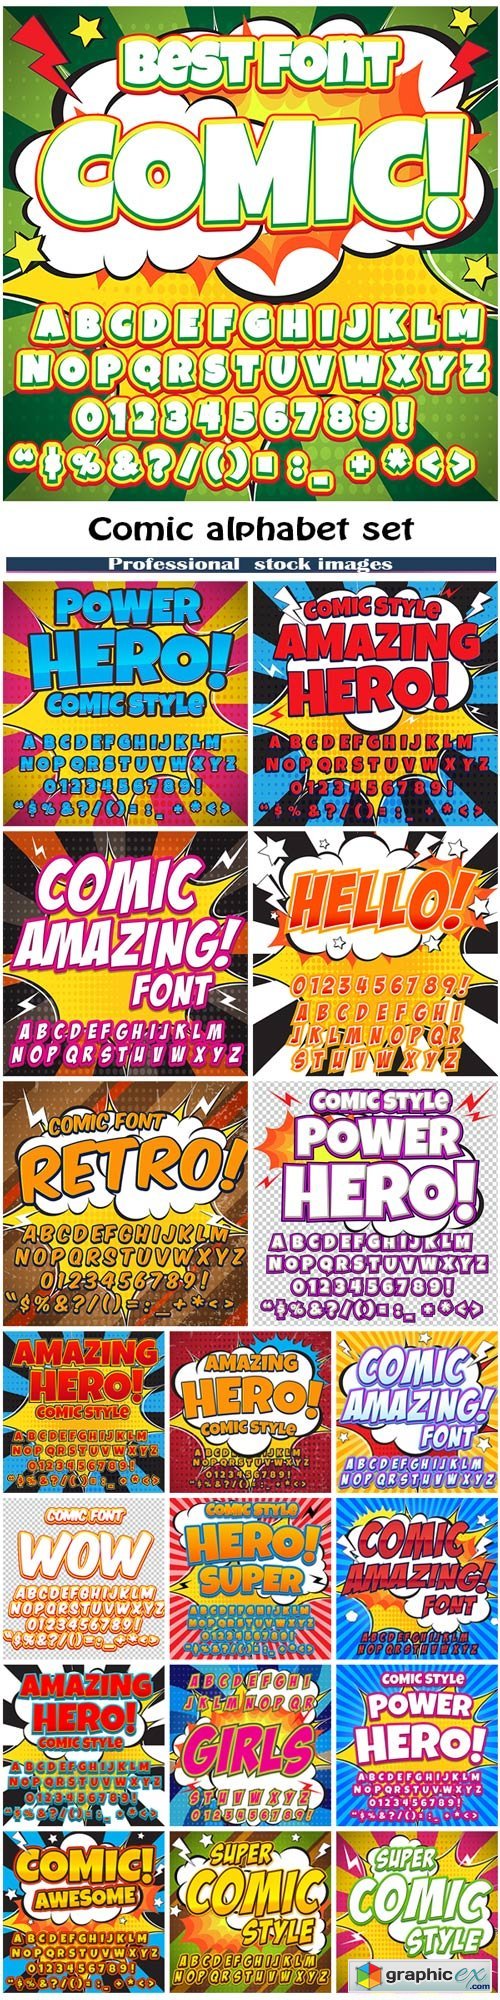 Comic alphabet set